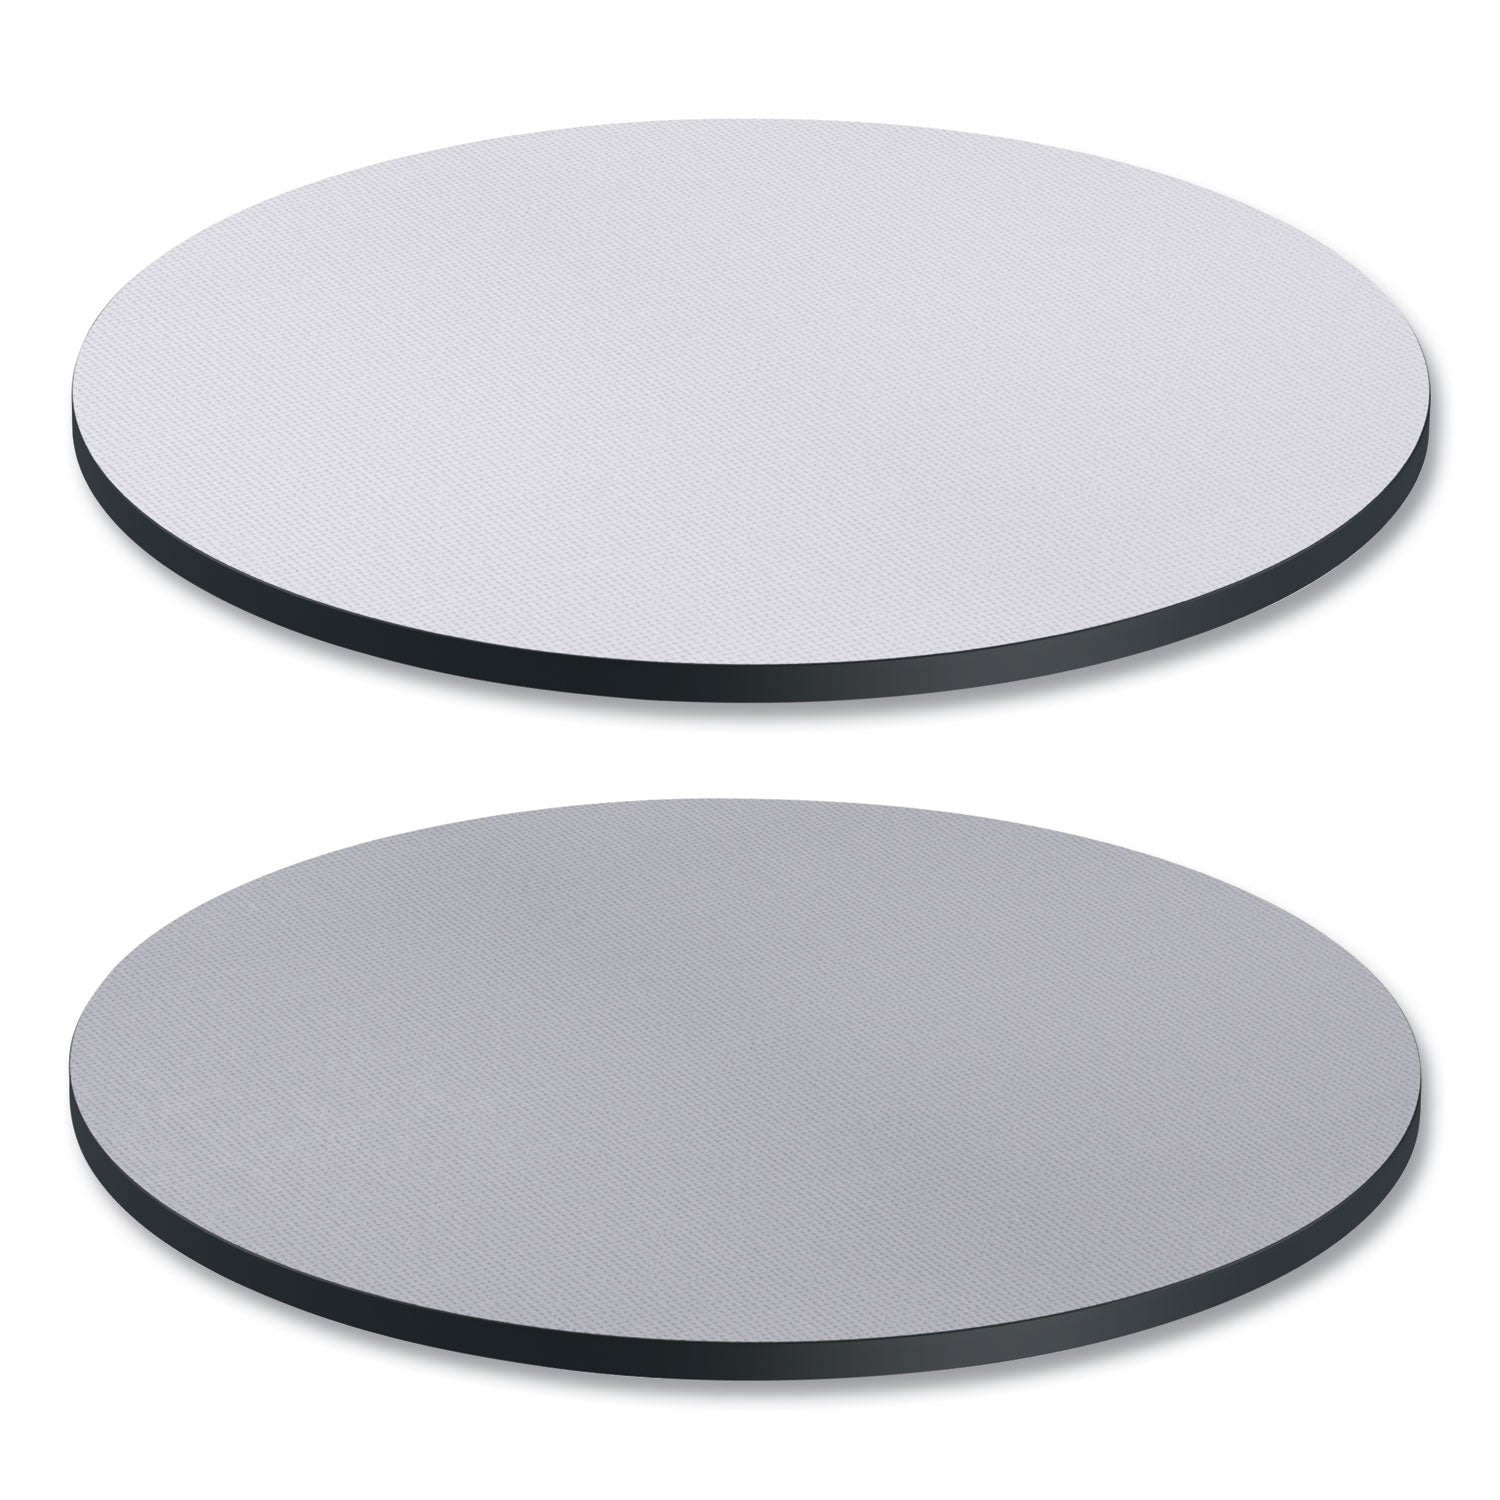 reversible-laminate-table-top-round-355-diameter-white-gray_alettrd36wg - 1